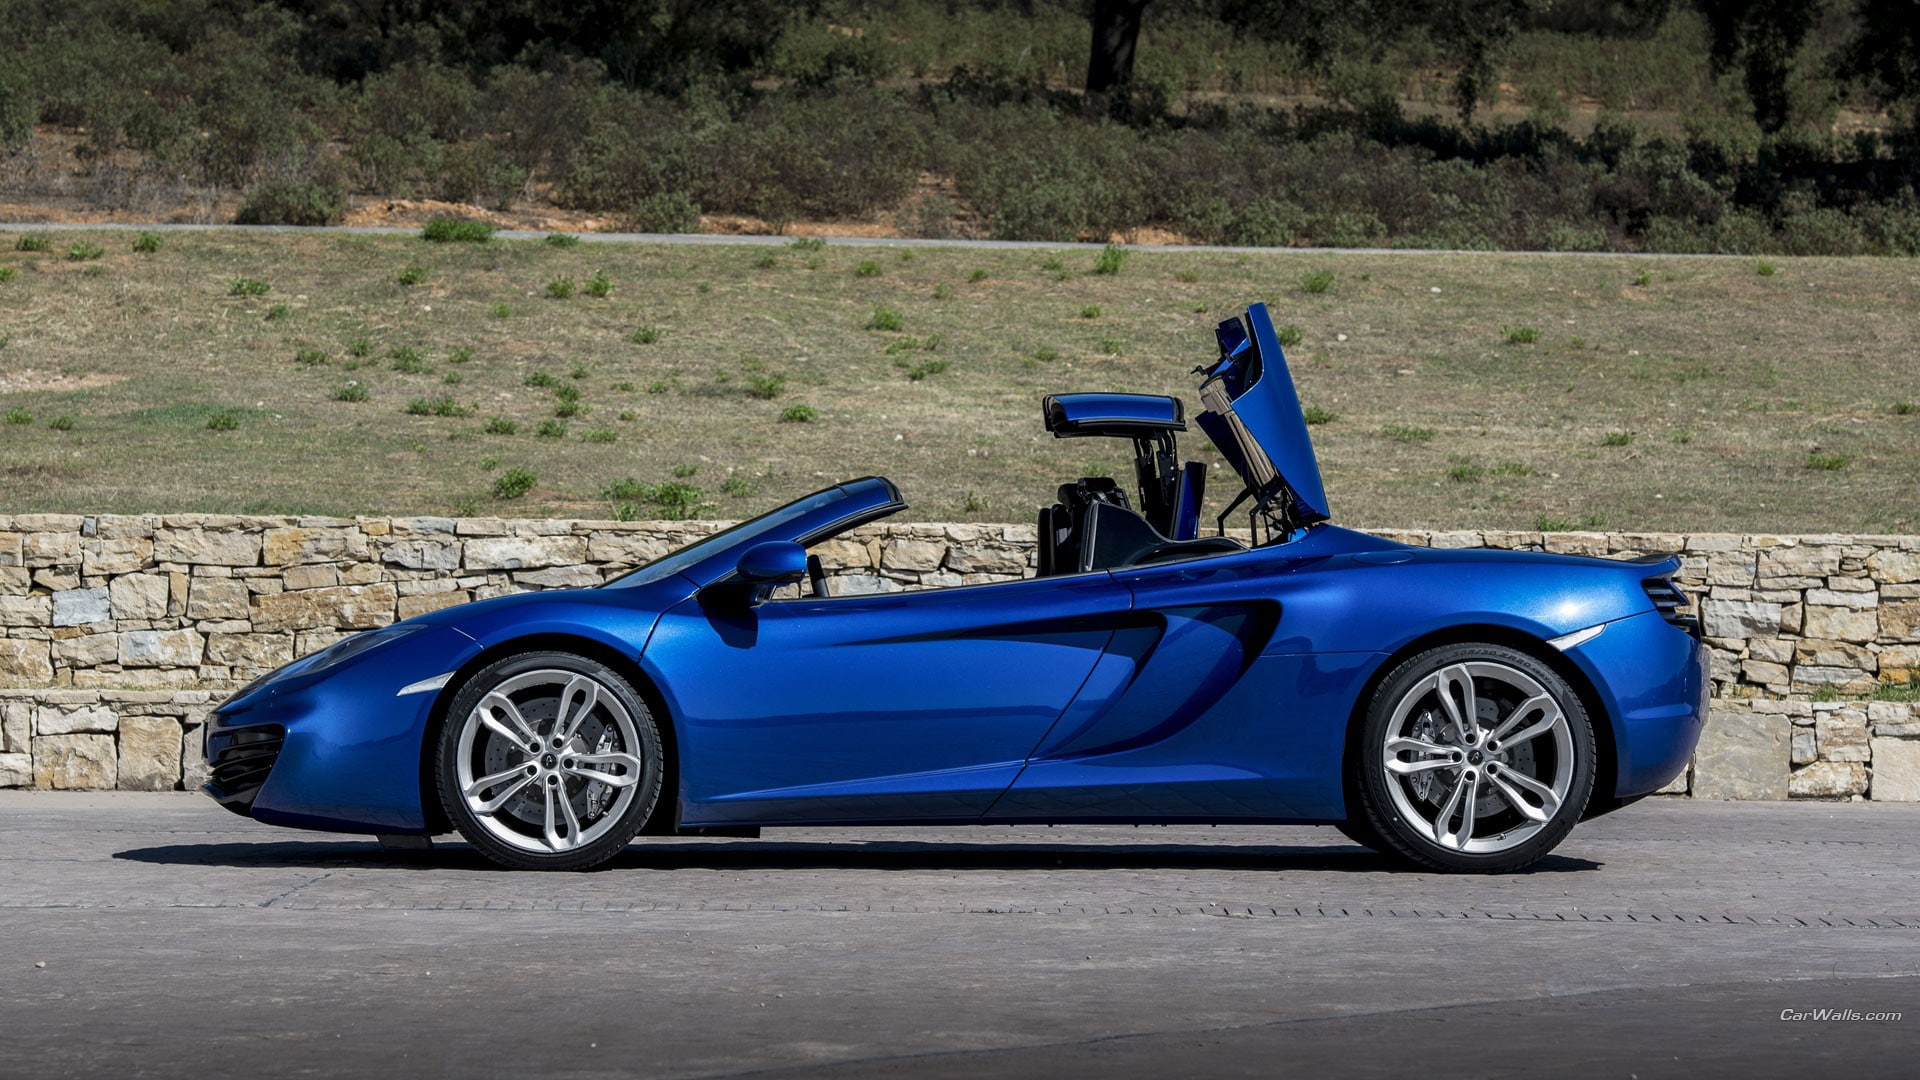 McLaren MC4-12C, blue cars, vehicle, transportation, mode of transportation